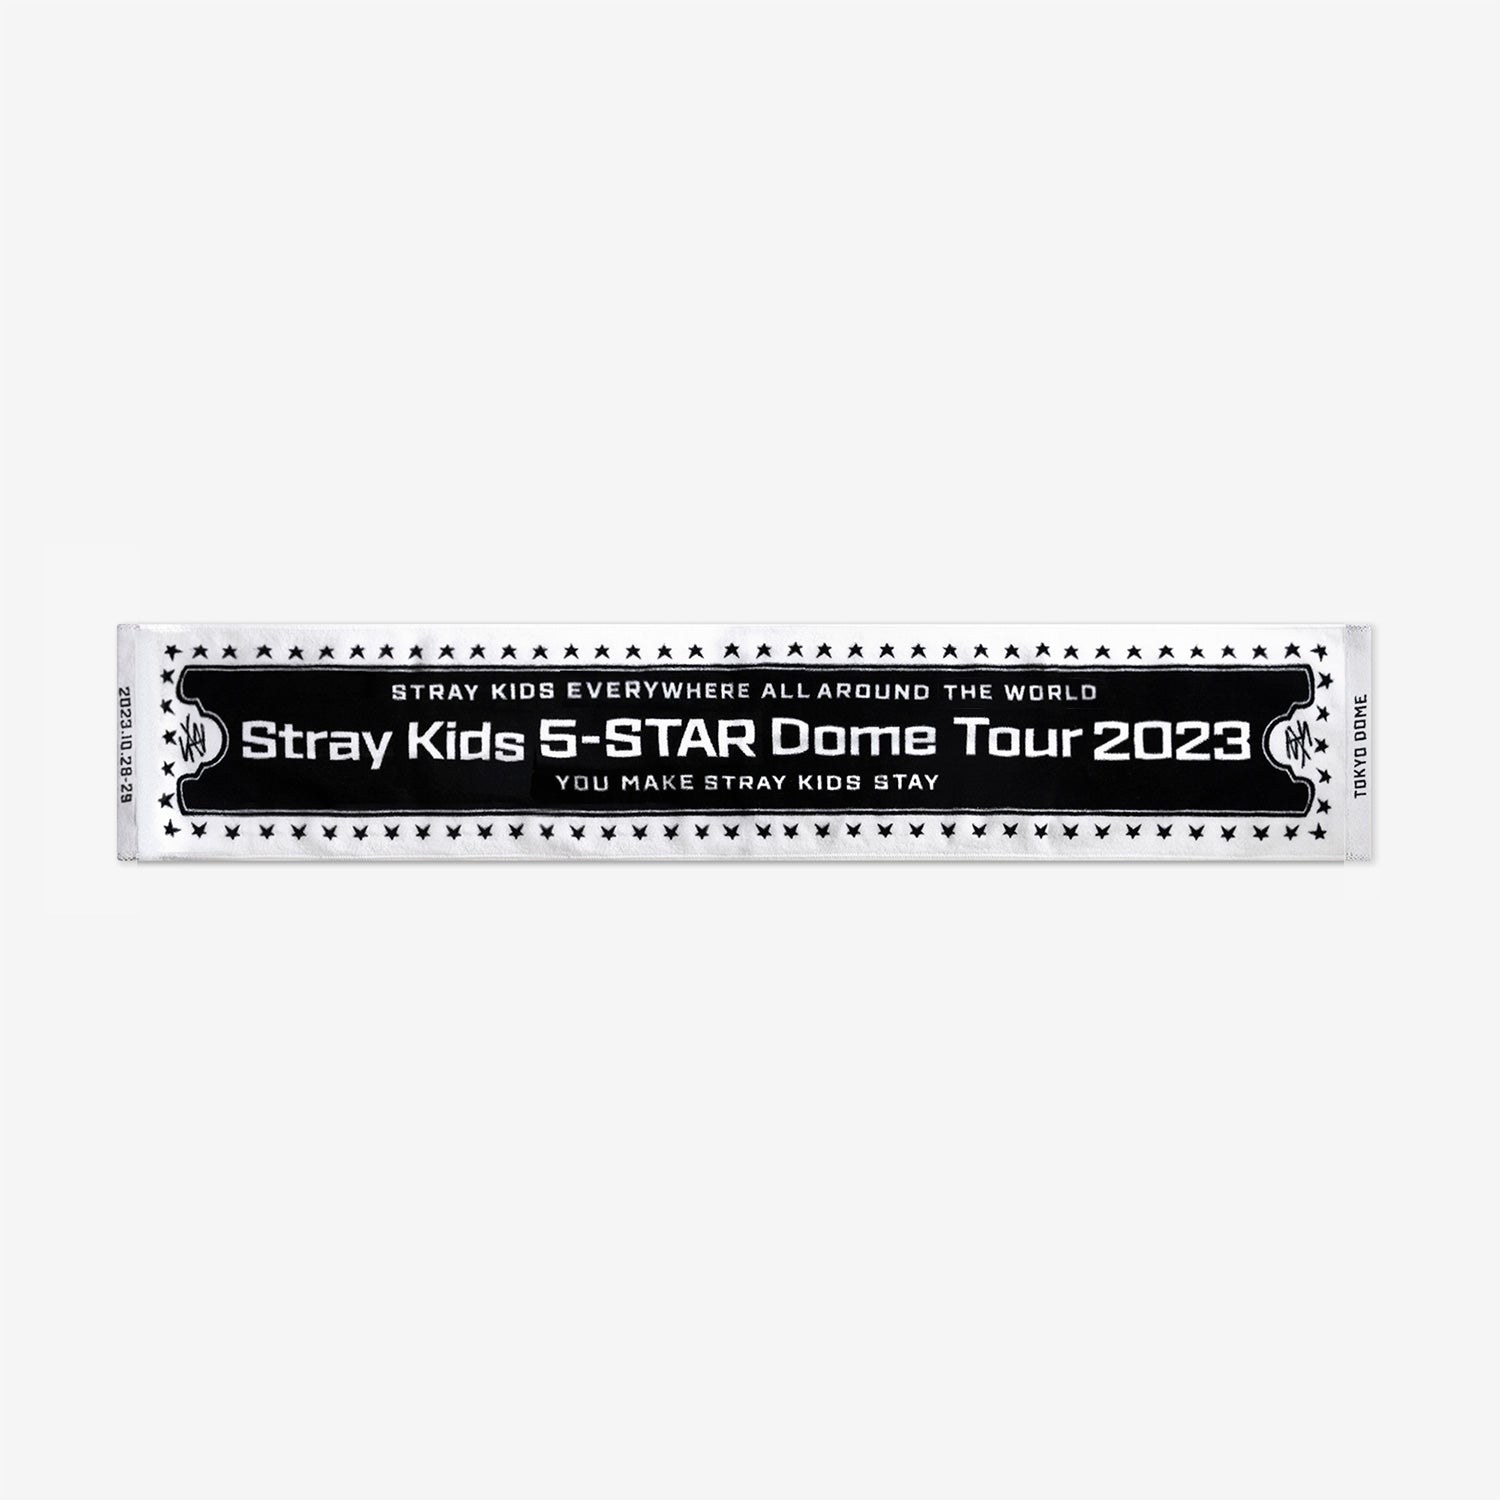 MUFFLER TOWEL【TOKYO】 / Stray Kids『5-STAR Dome Tour 2023』